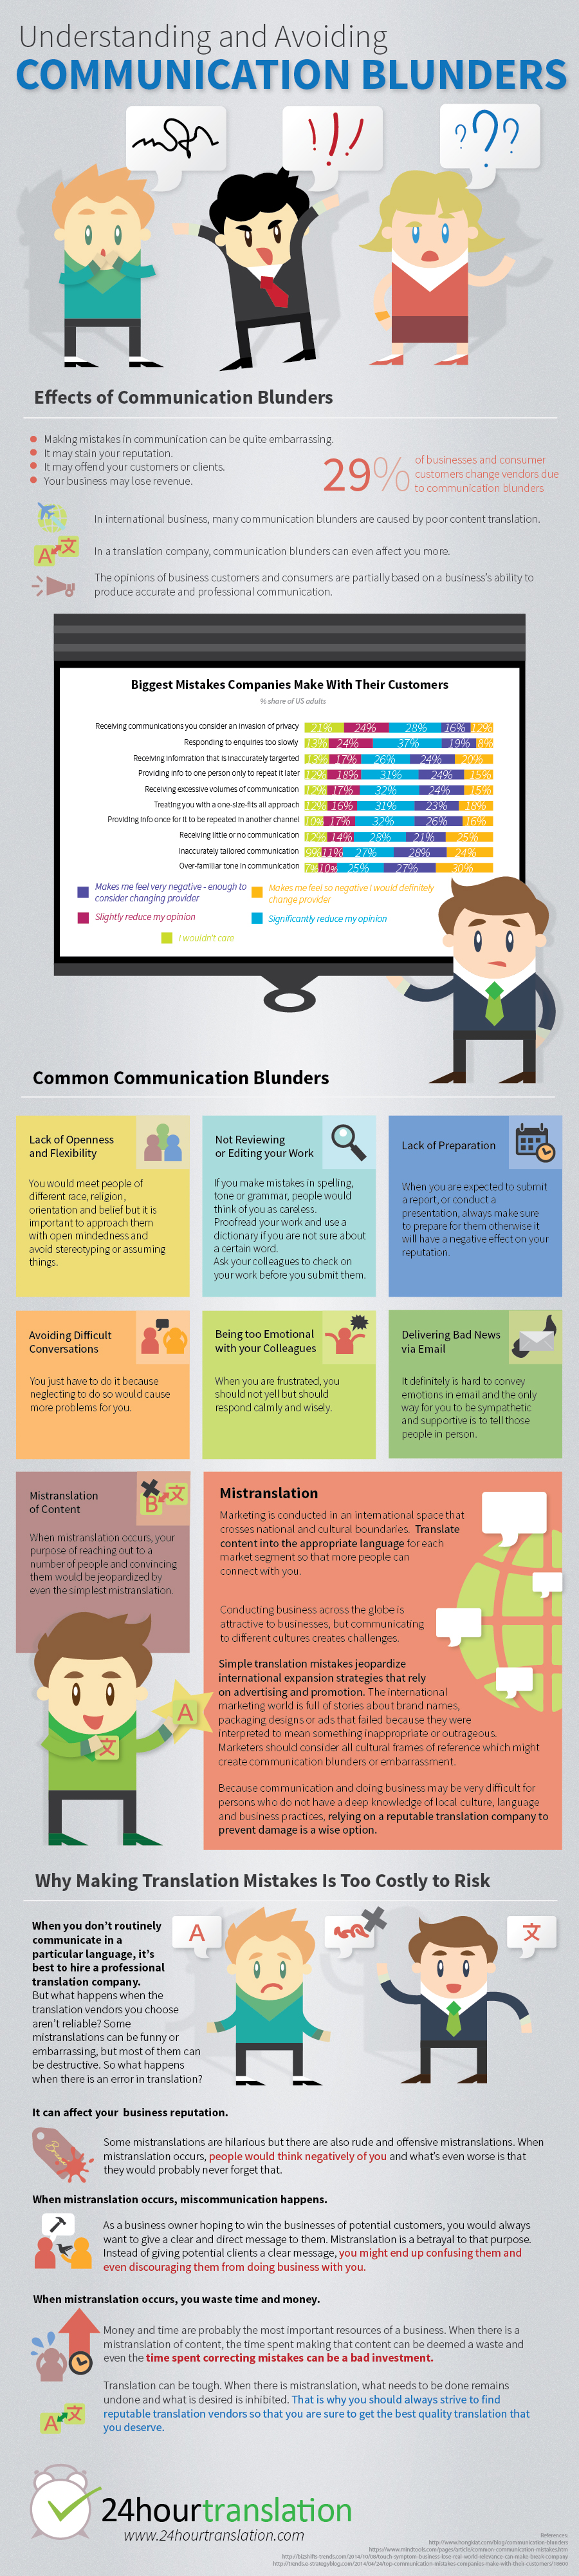 Understanding Communication Blunders